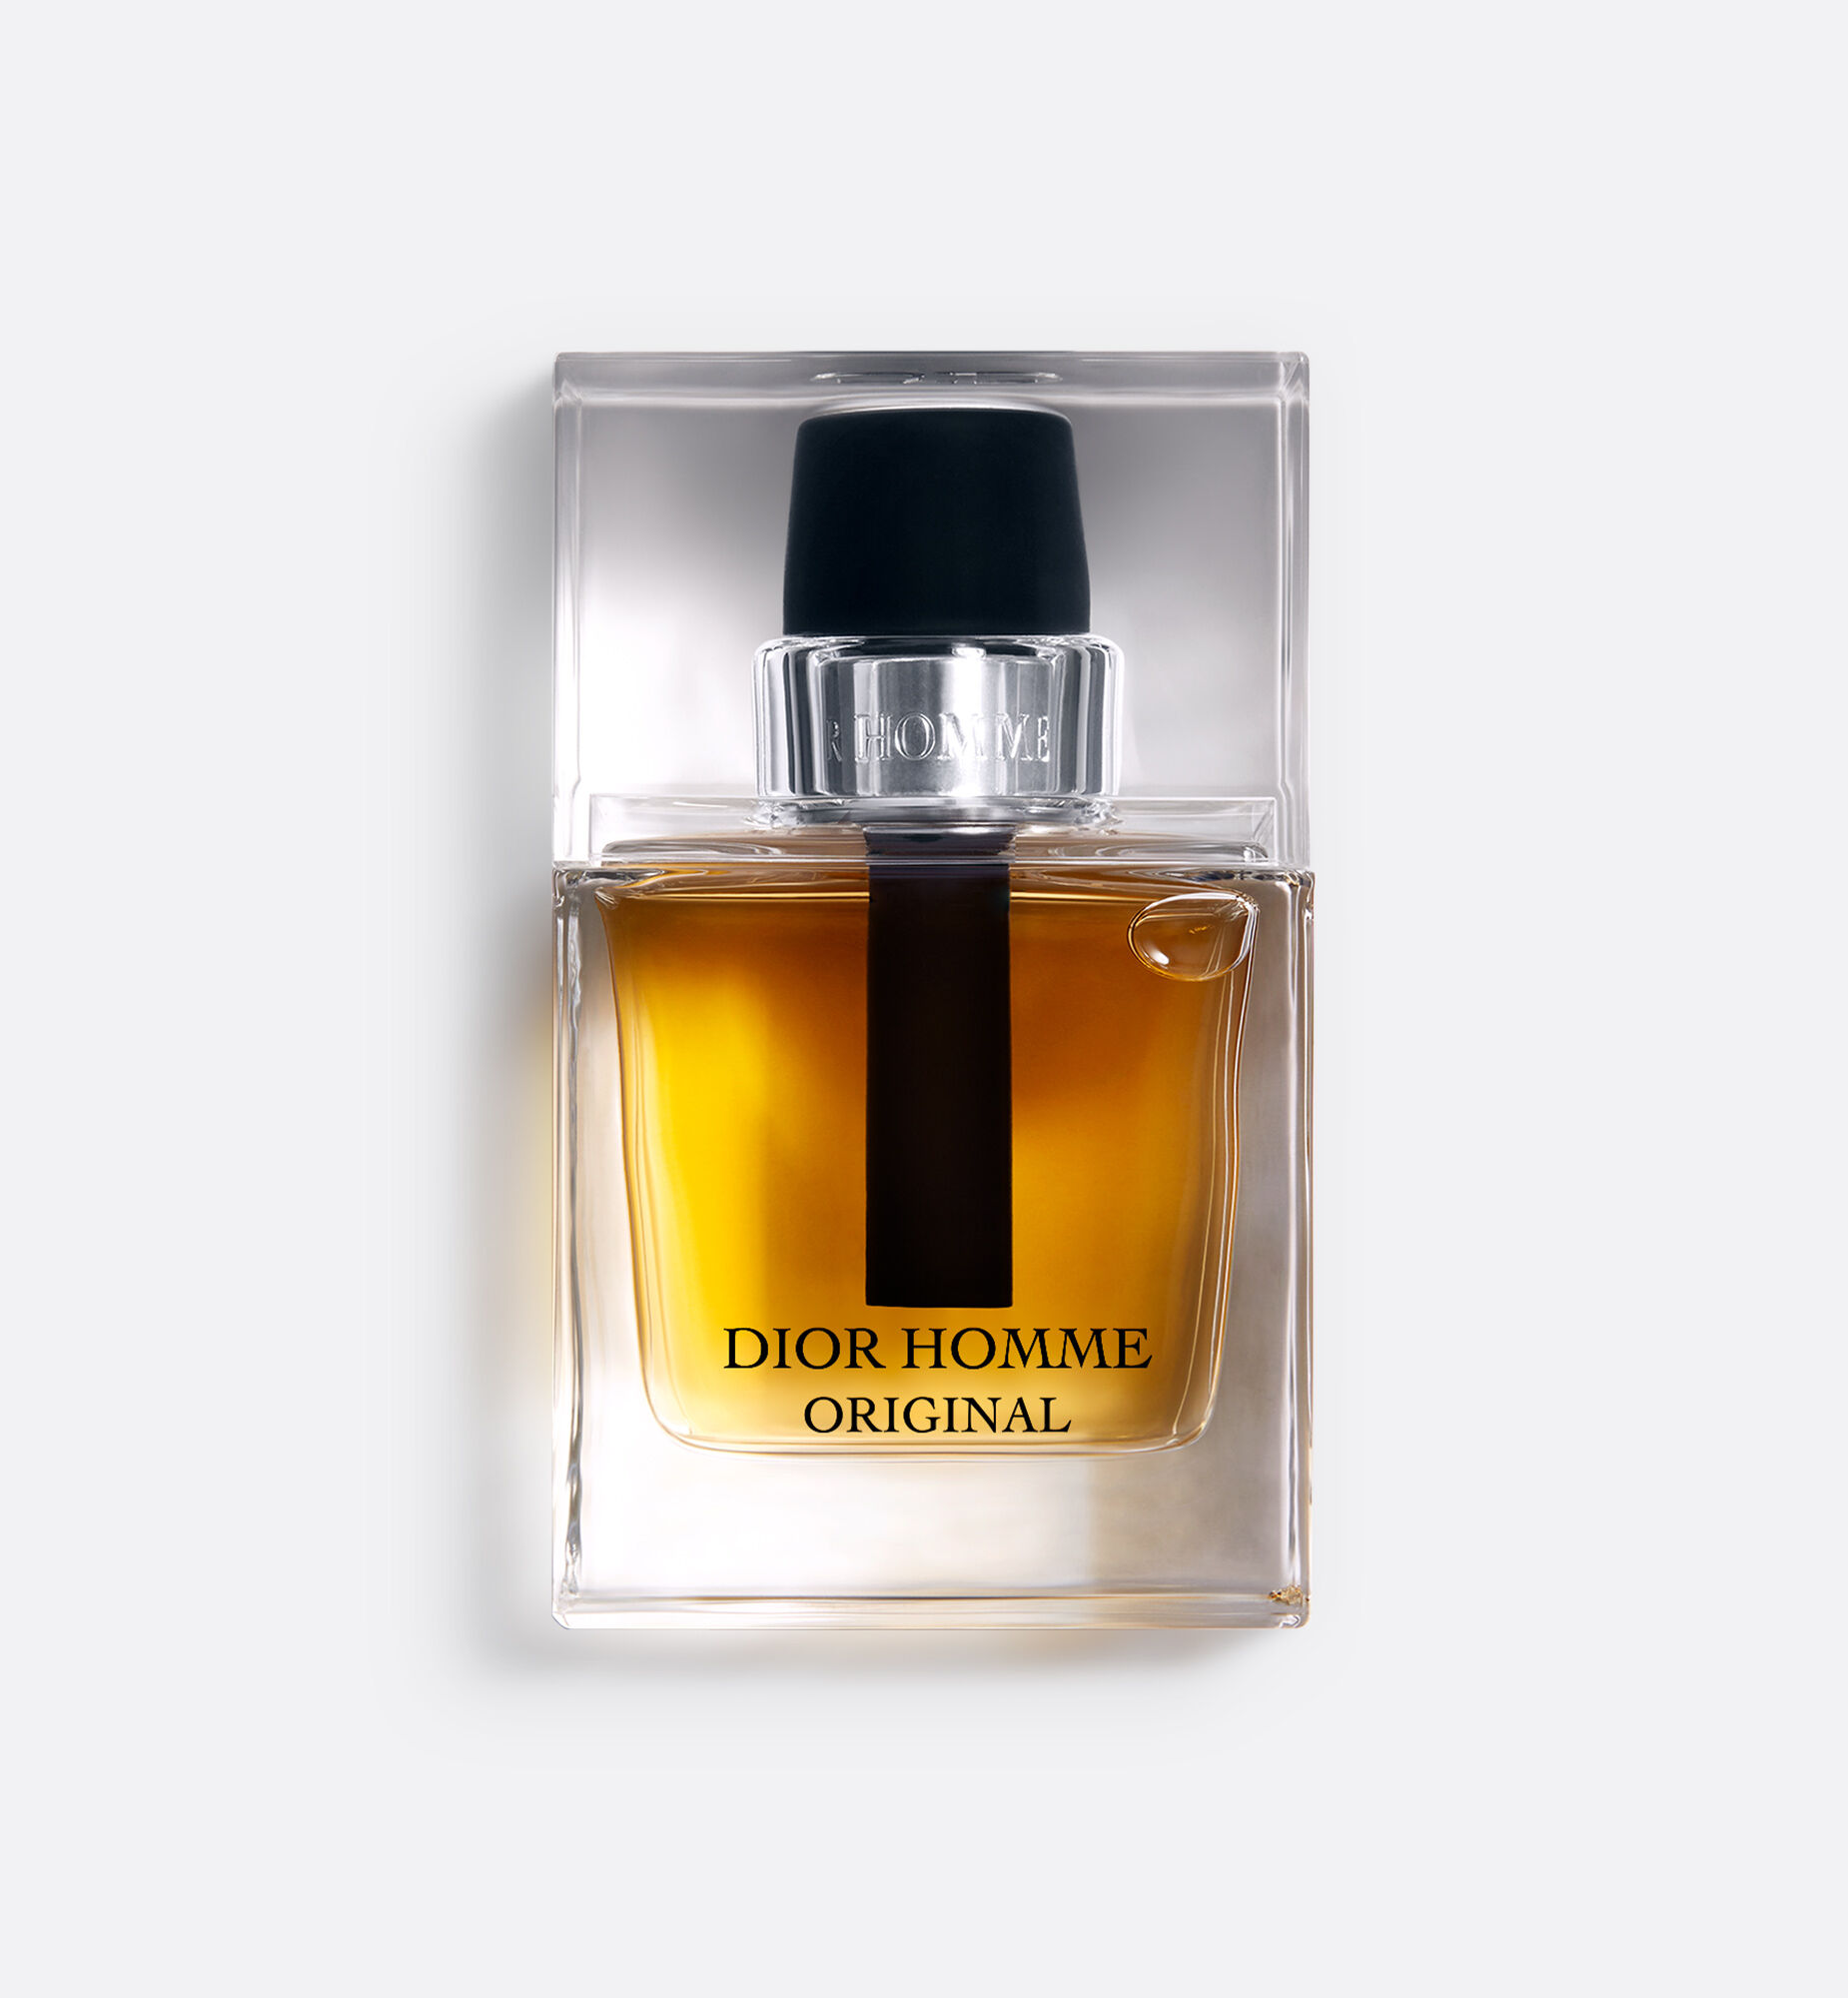 Nước hoa Christian Dior Dior Homme Parfum  namperfume